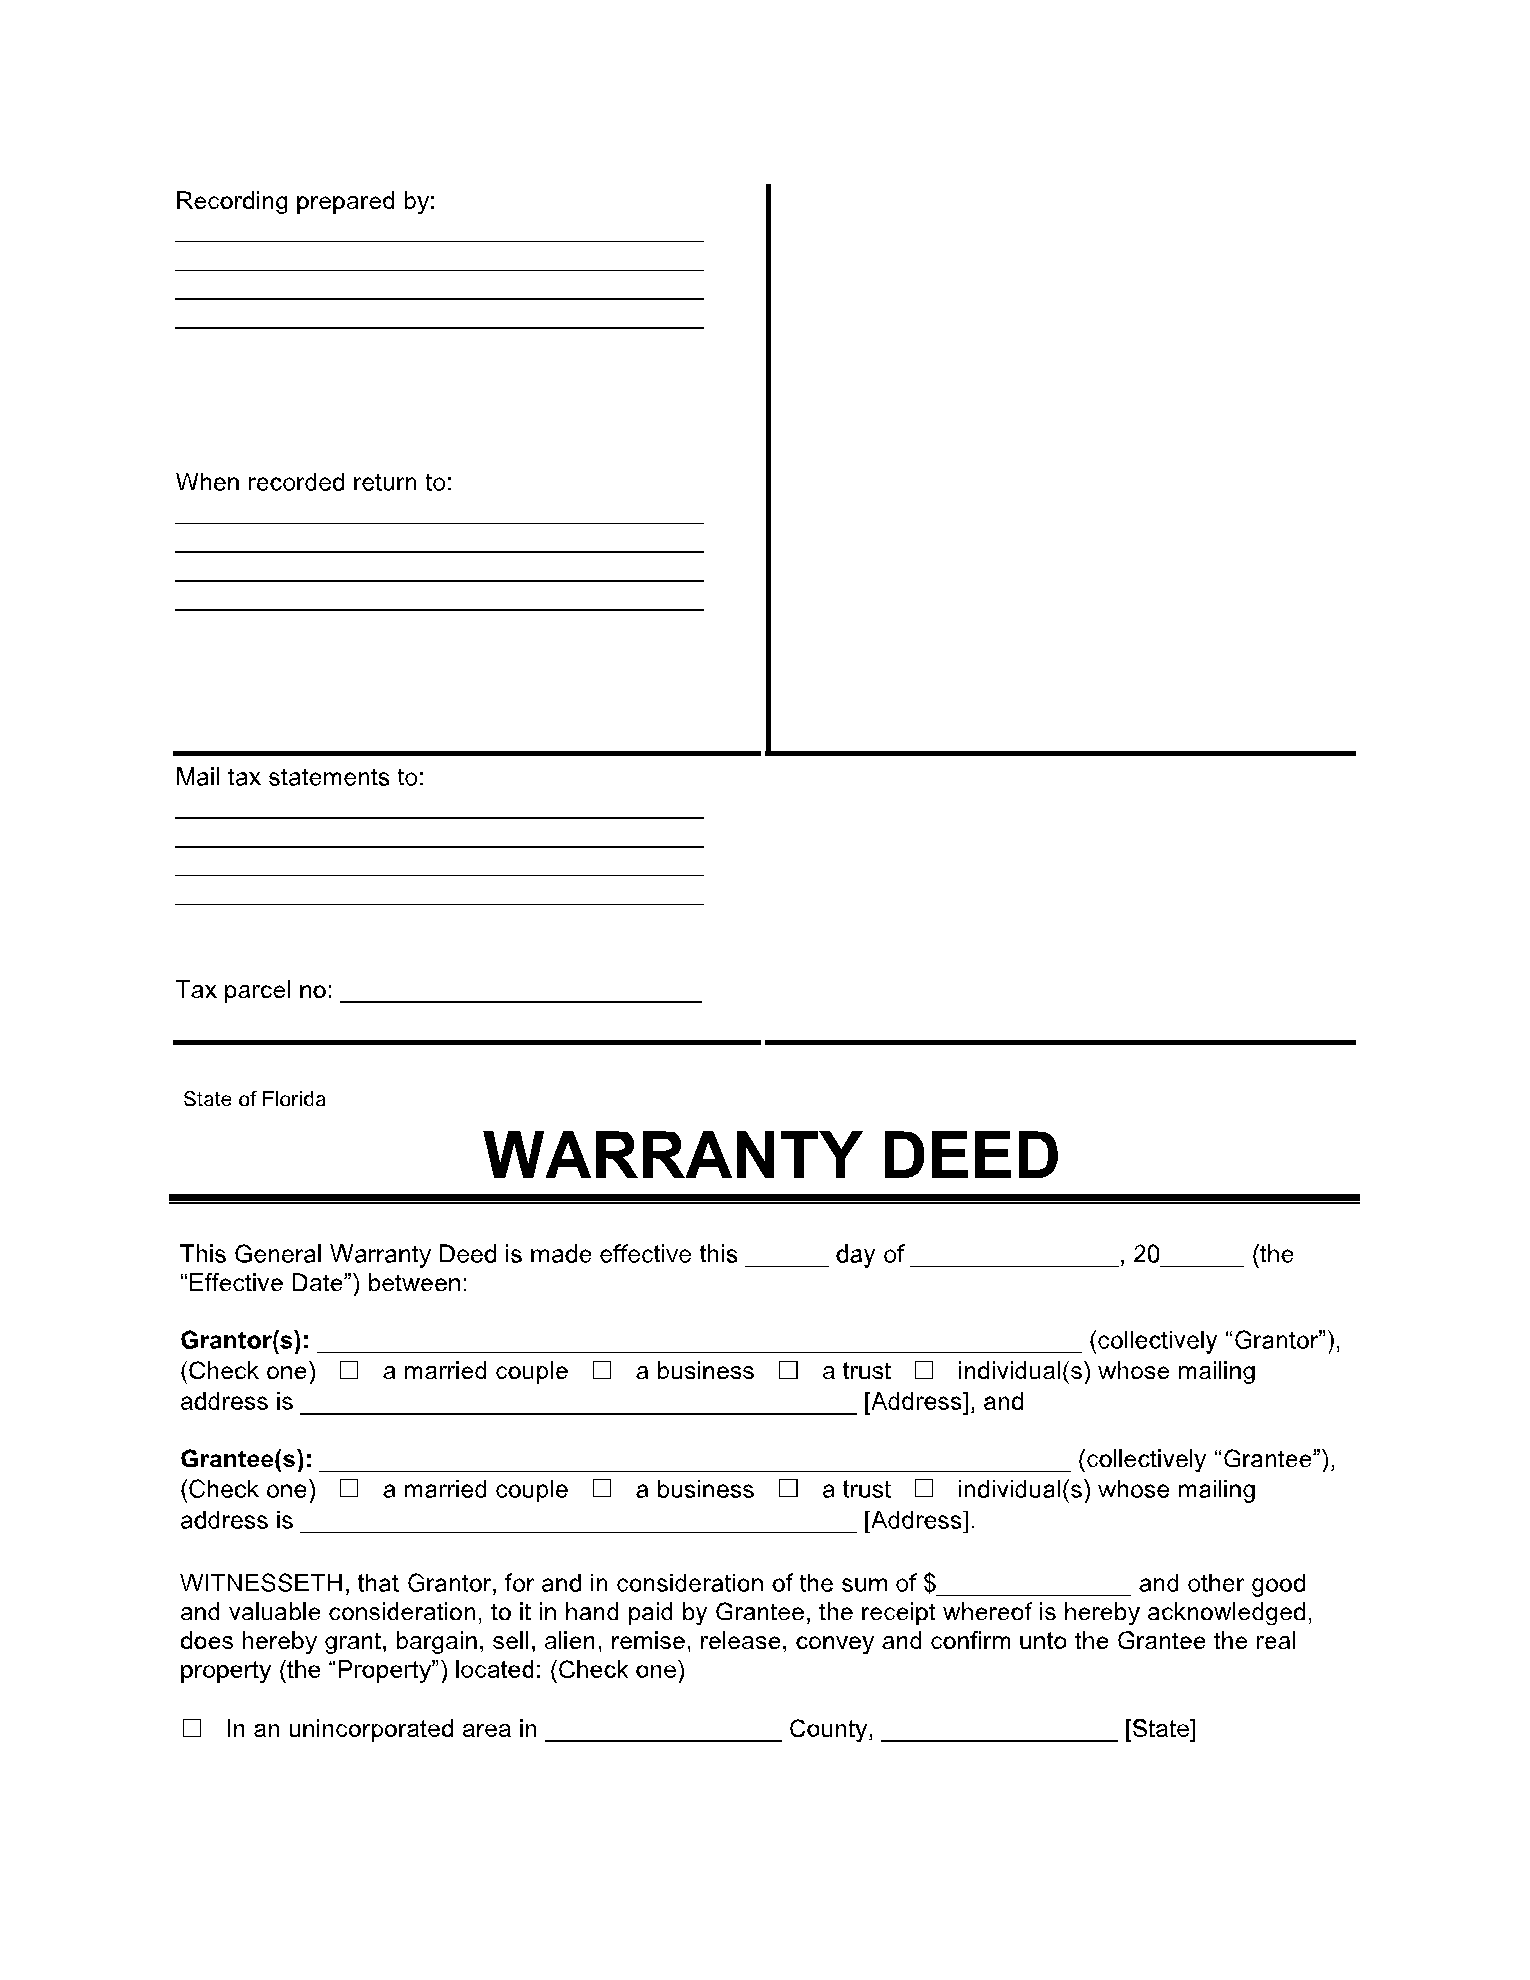 Florida General Warranty Deed Form 1